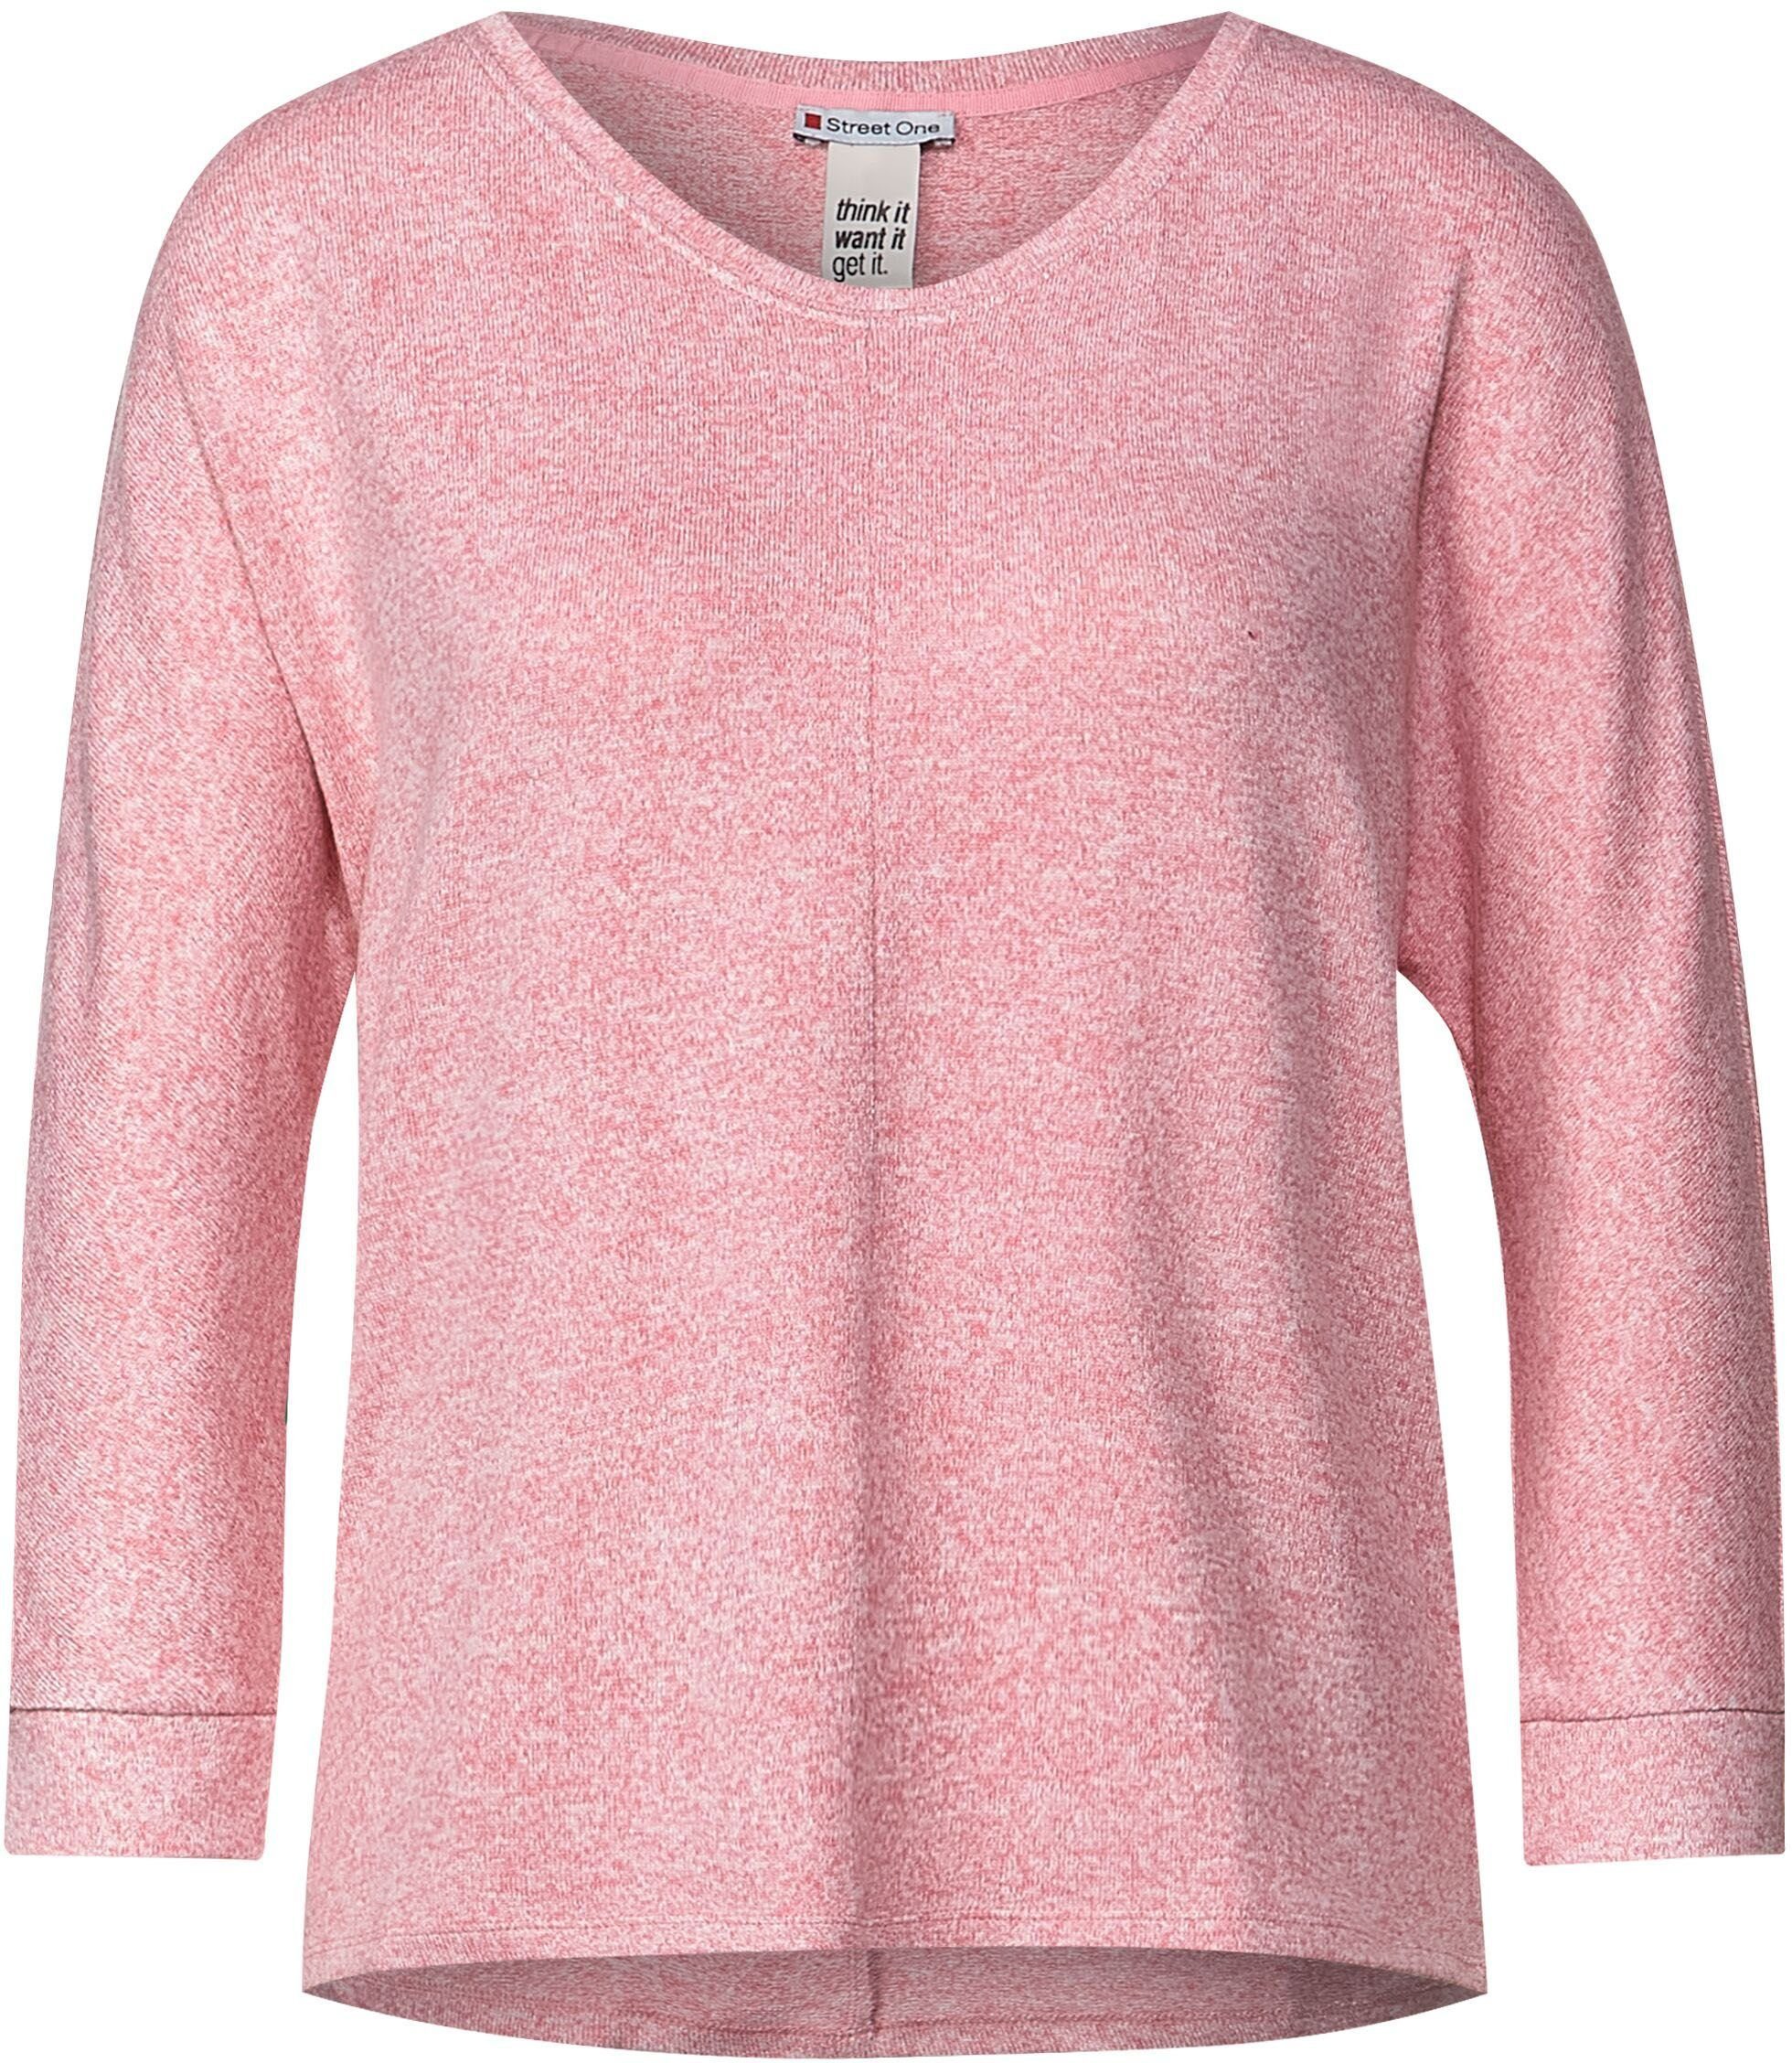 STREET ONE 3/4-Arm-Shirt Ellen Style rose Melange-Optik winter melange in